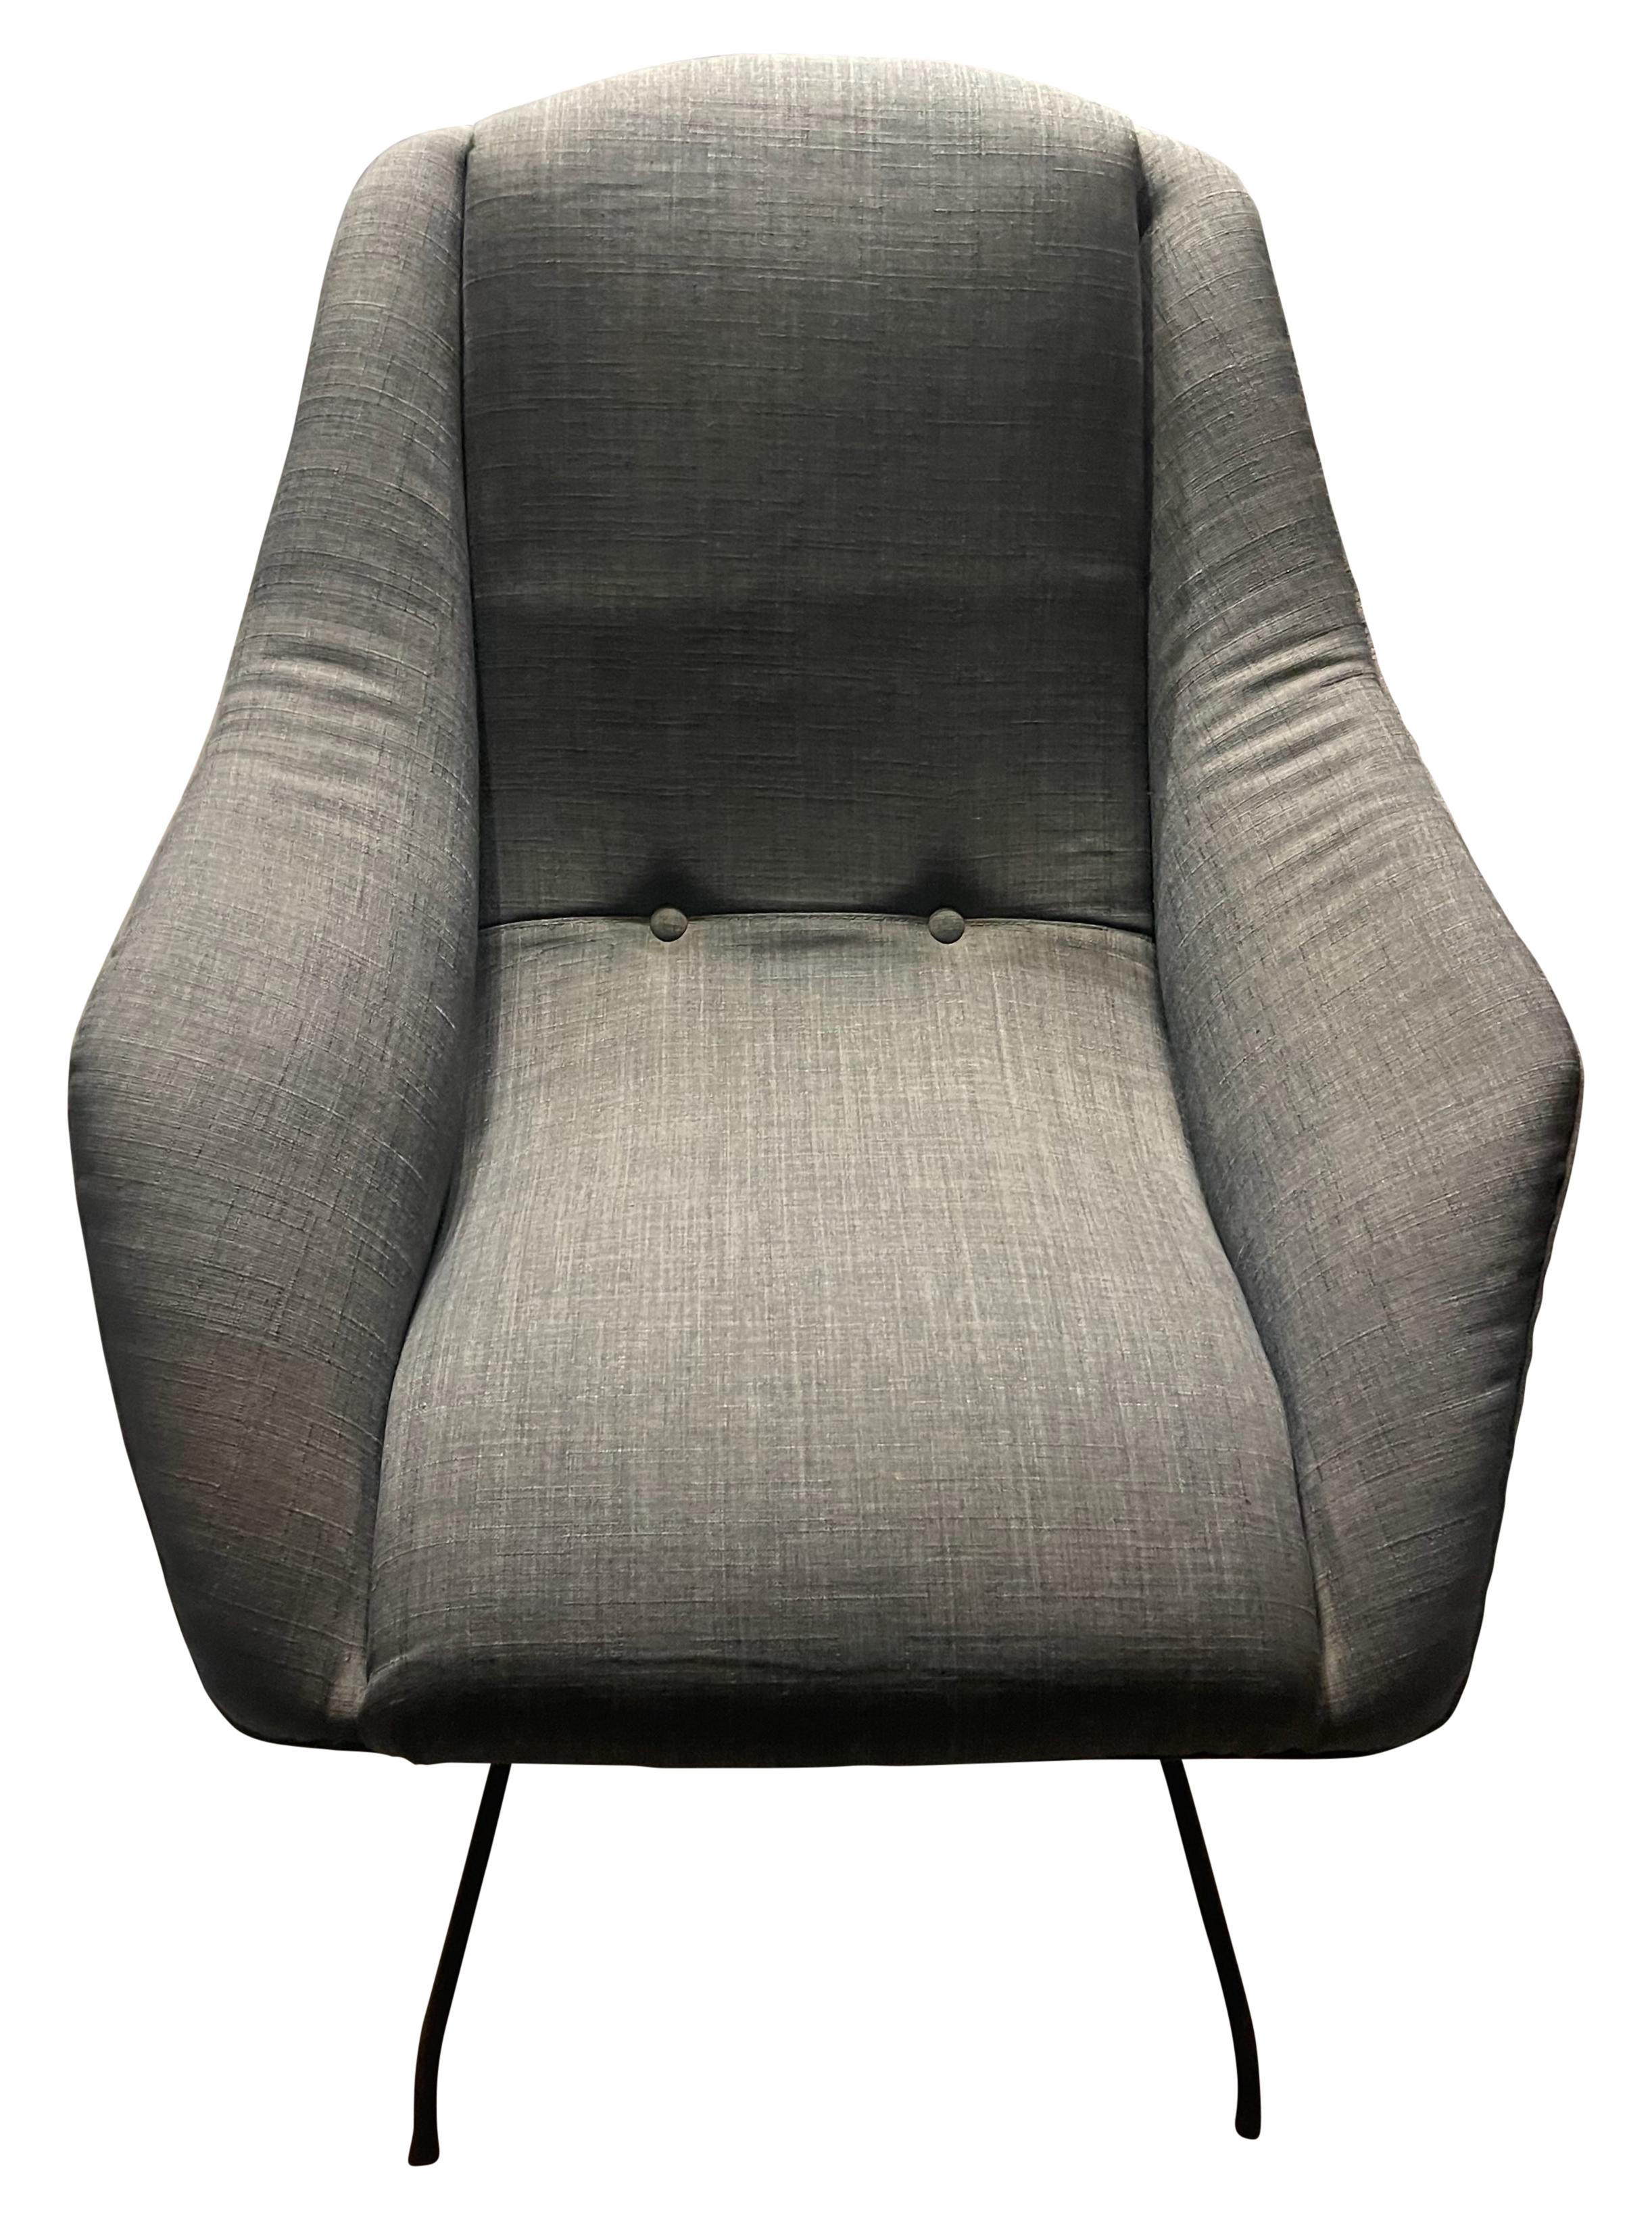 Carlo Hauner Martin Eisler Concha Lounge Chair, Brazil, 1950 For Sale 1